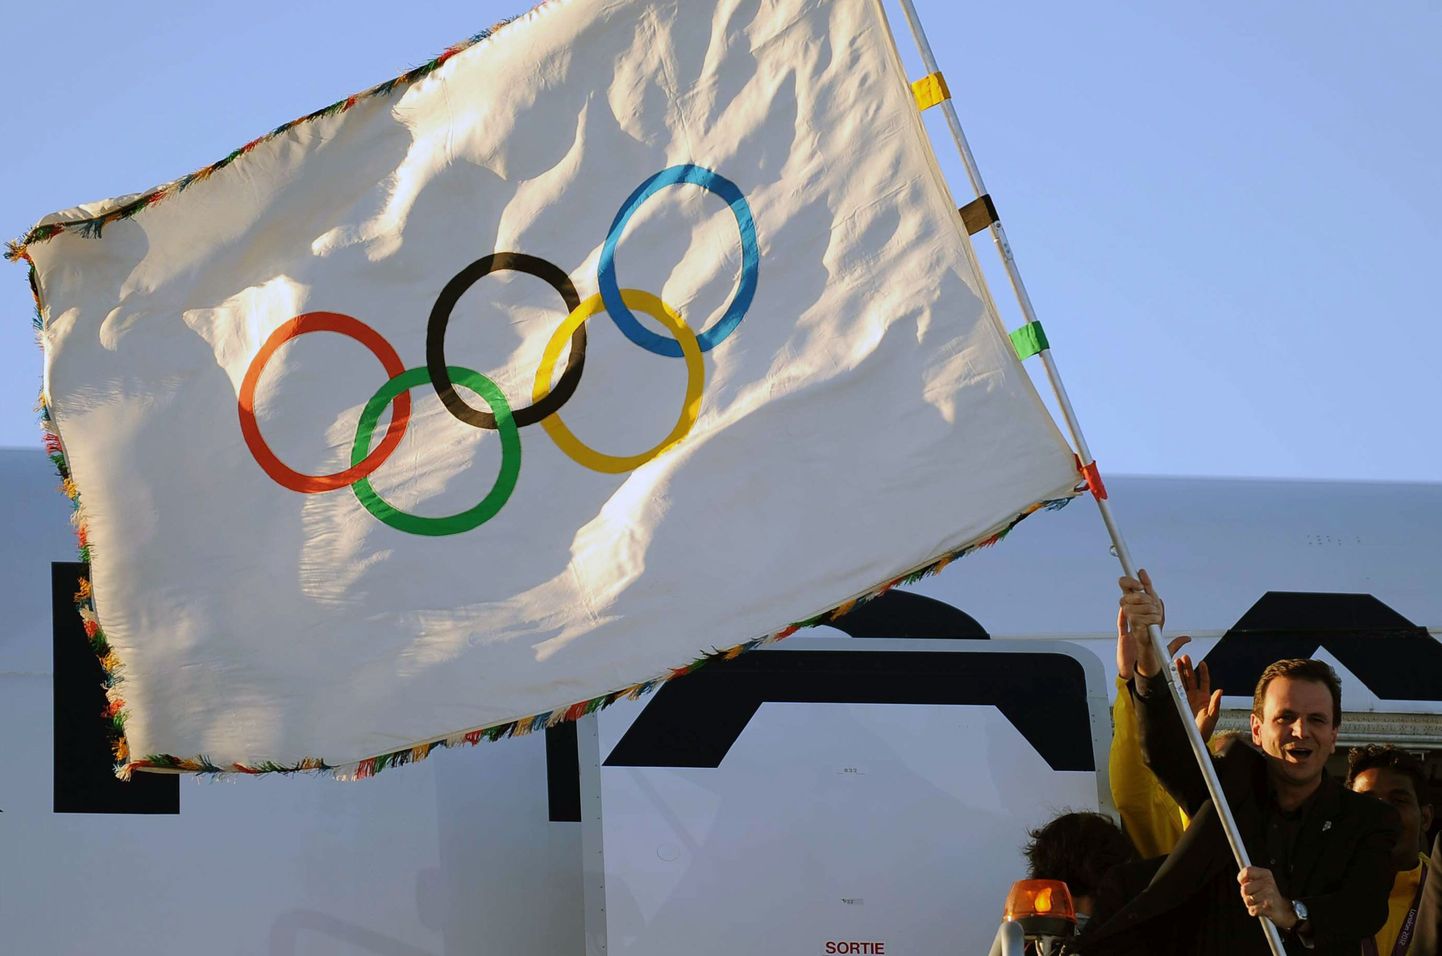 Олимпийский флаг.